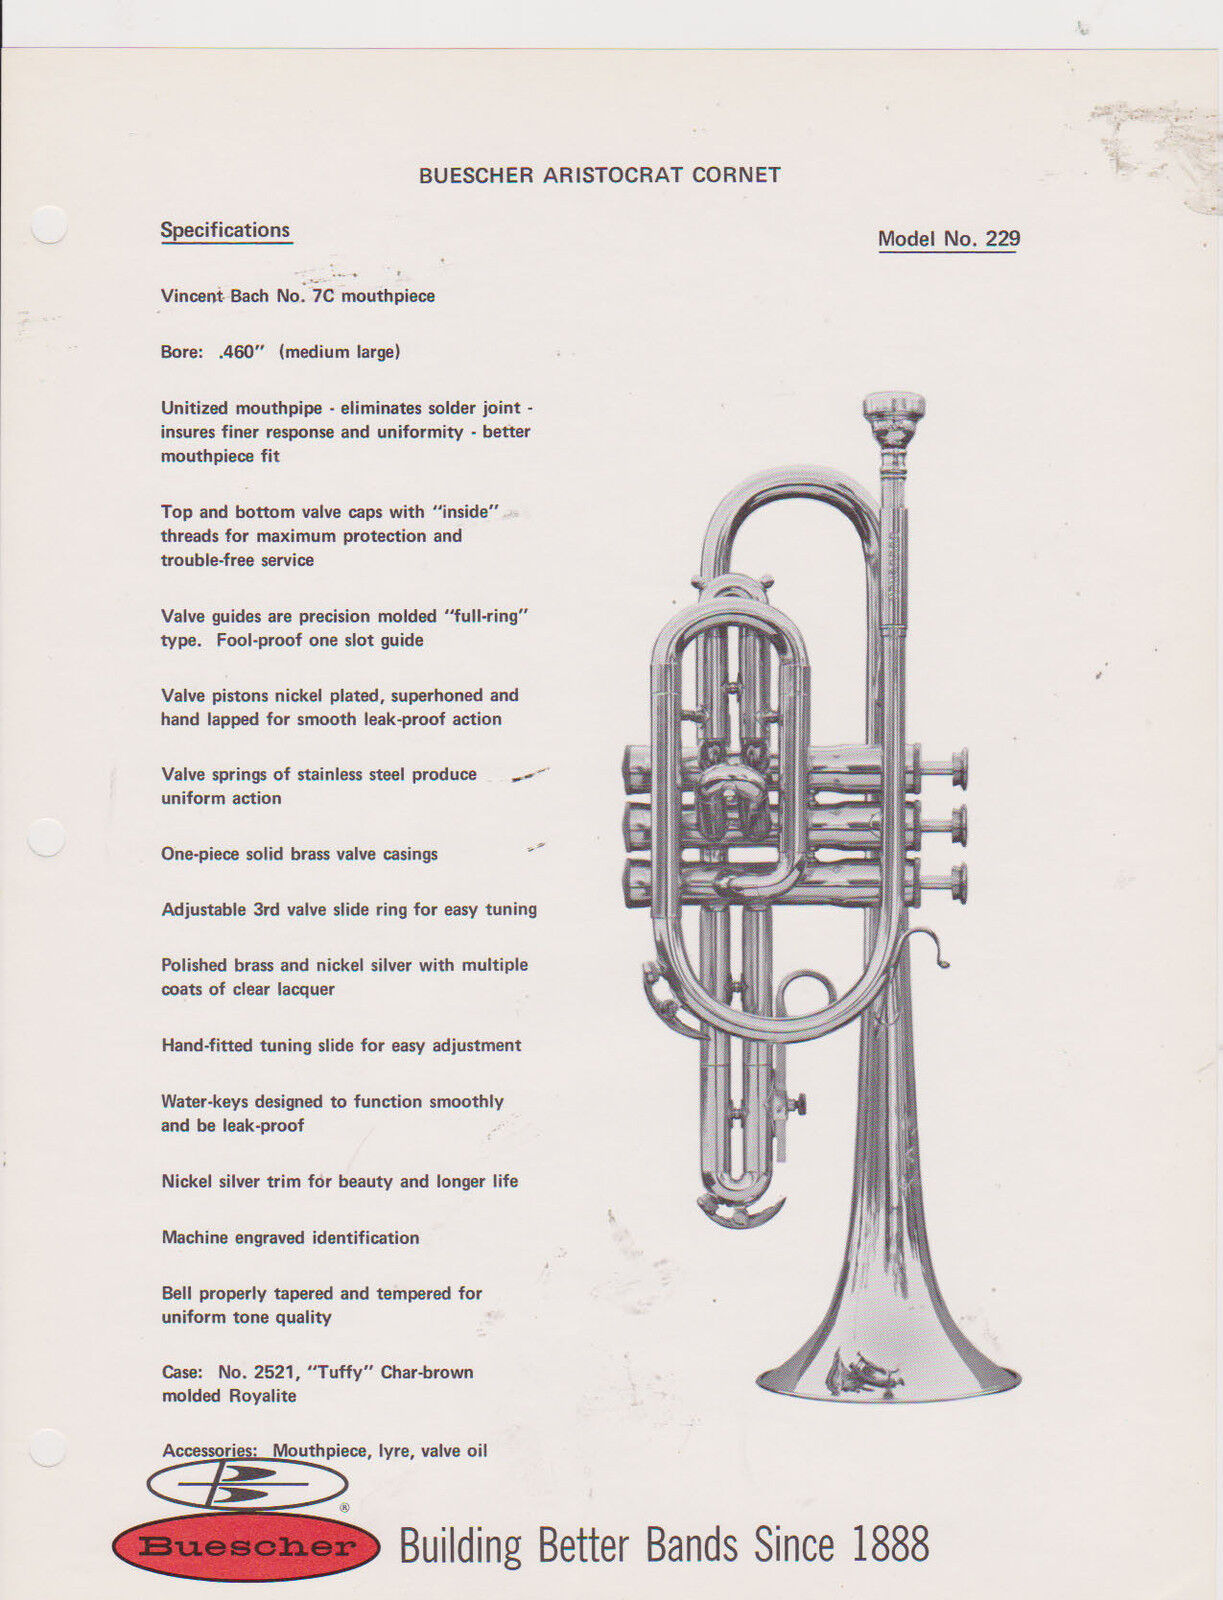 VINTAGE AD SHEET #2519 - 1970s BUESCHER MUSICAL INSTRUMENT - ARISTOCRAT CORNET